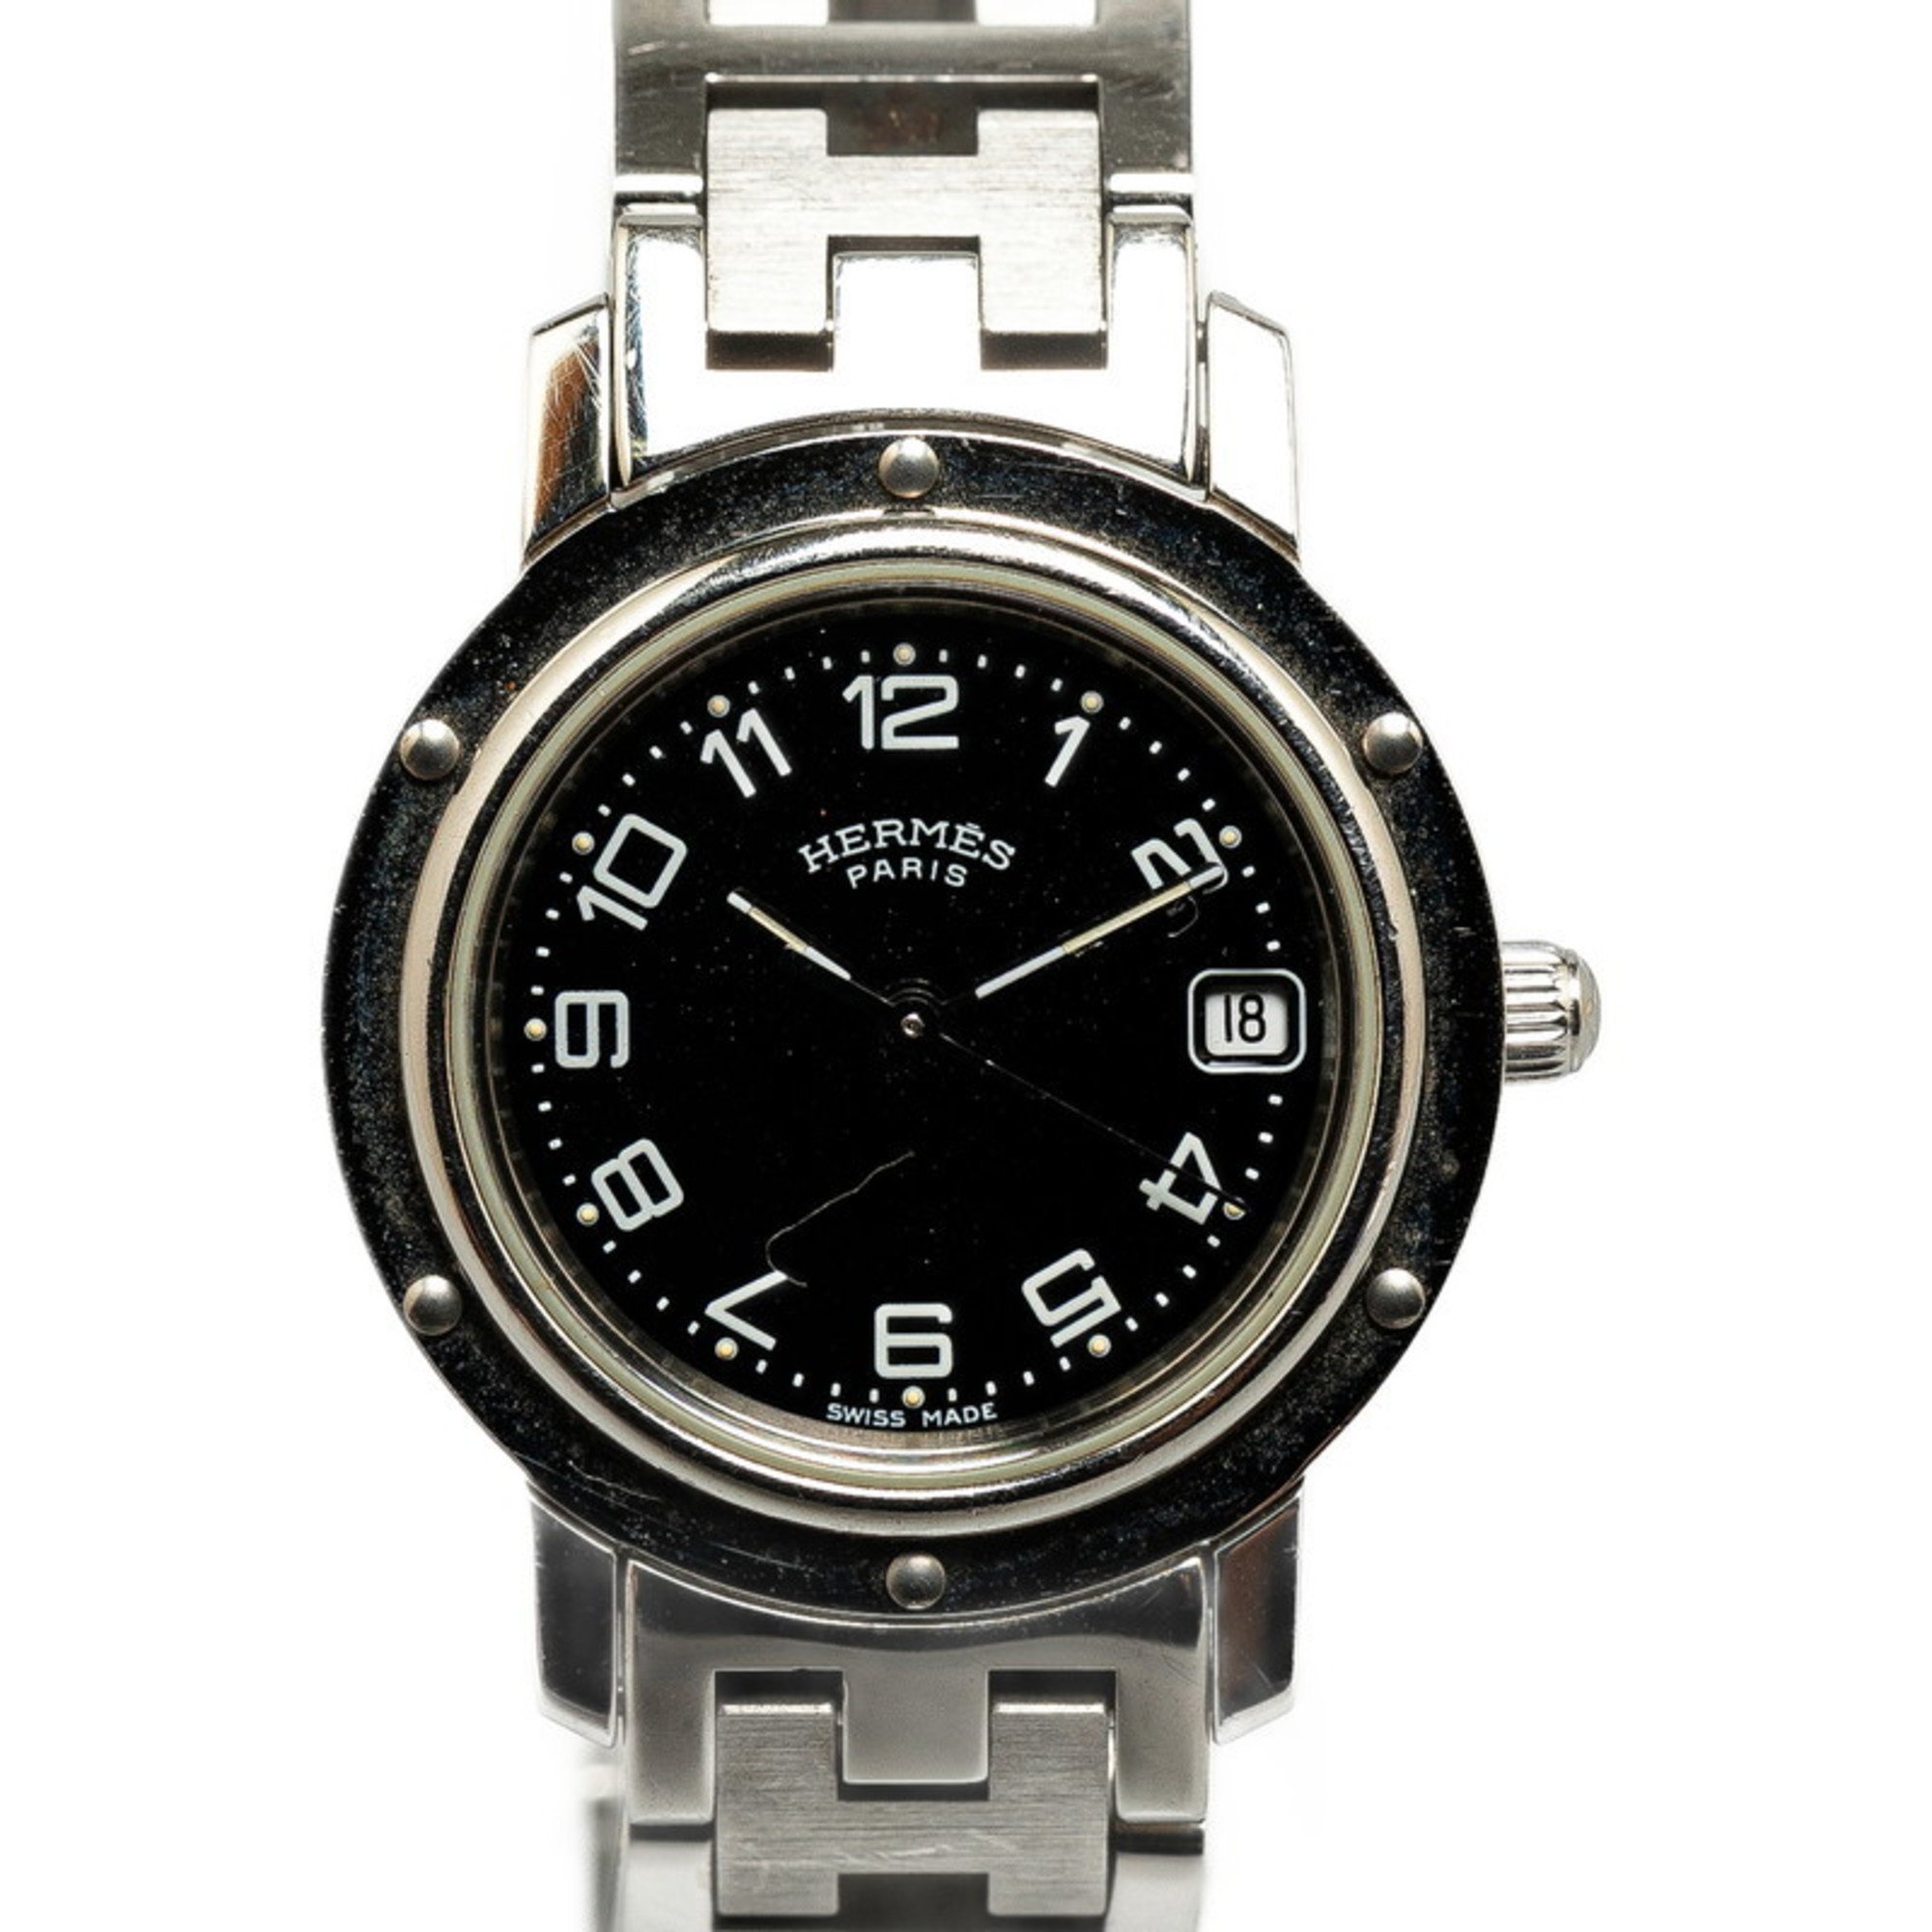 Hermes Clipper Watch CL4.210 Quartz Black Dial Stainless Steel Women's HERMES